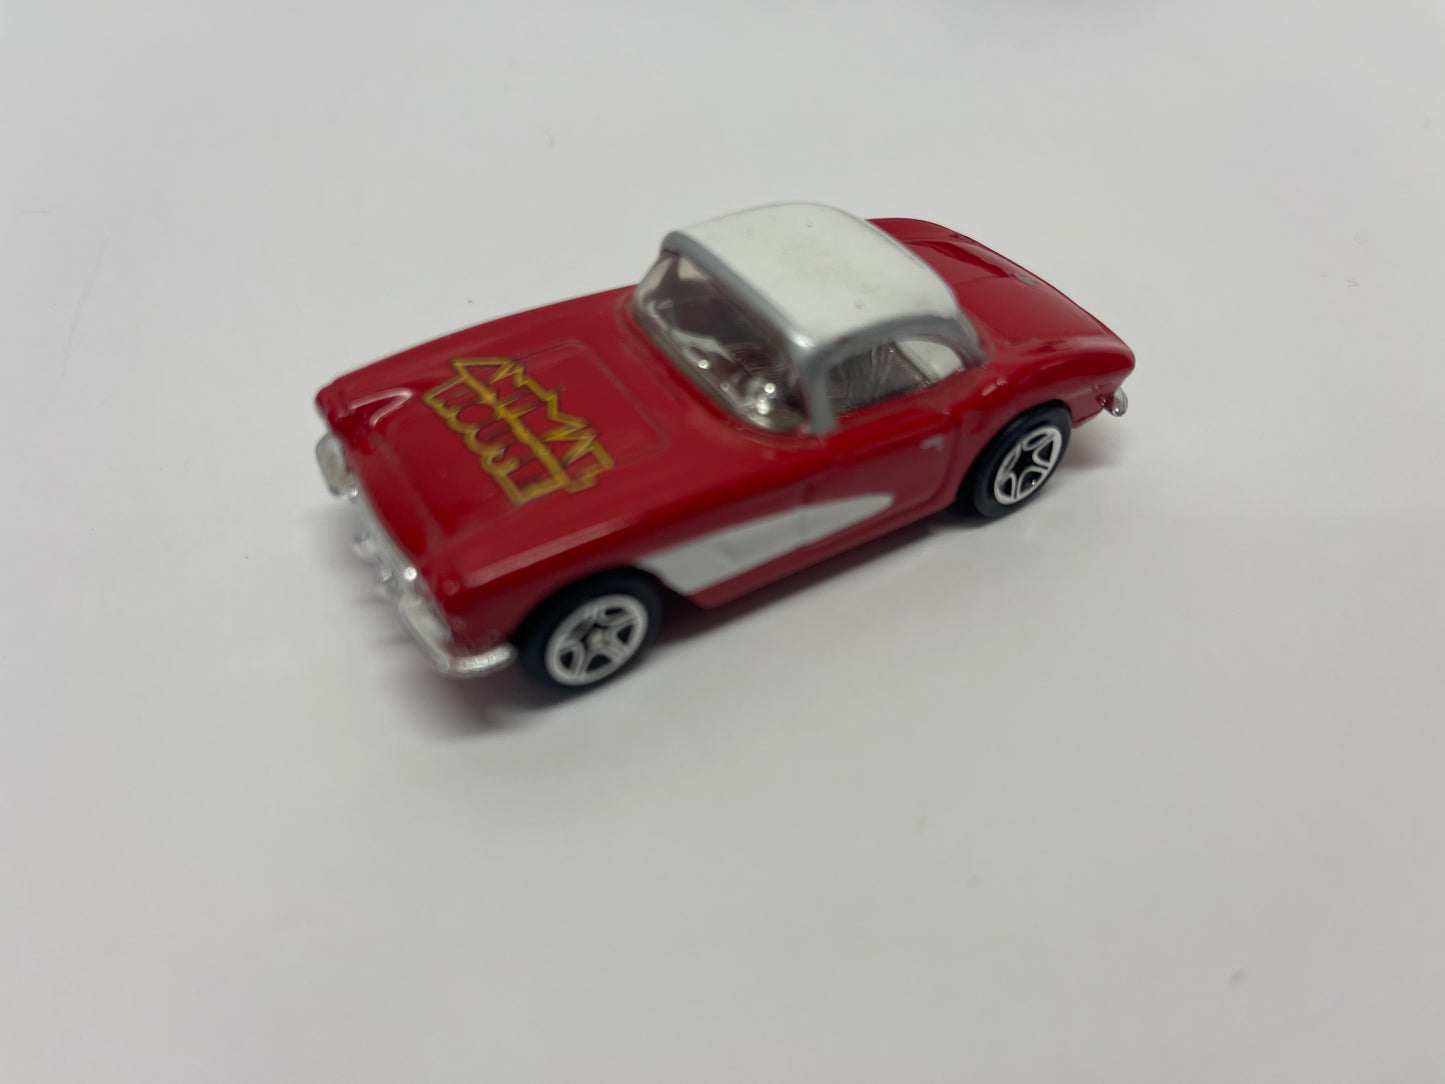 "OLDER" Loose Hot Wheels & Matchbox MOVIE CARS 1/64